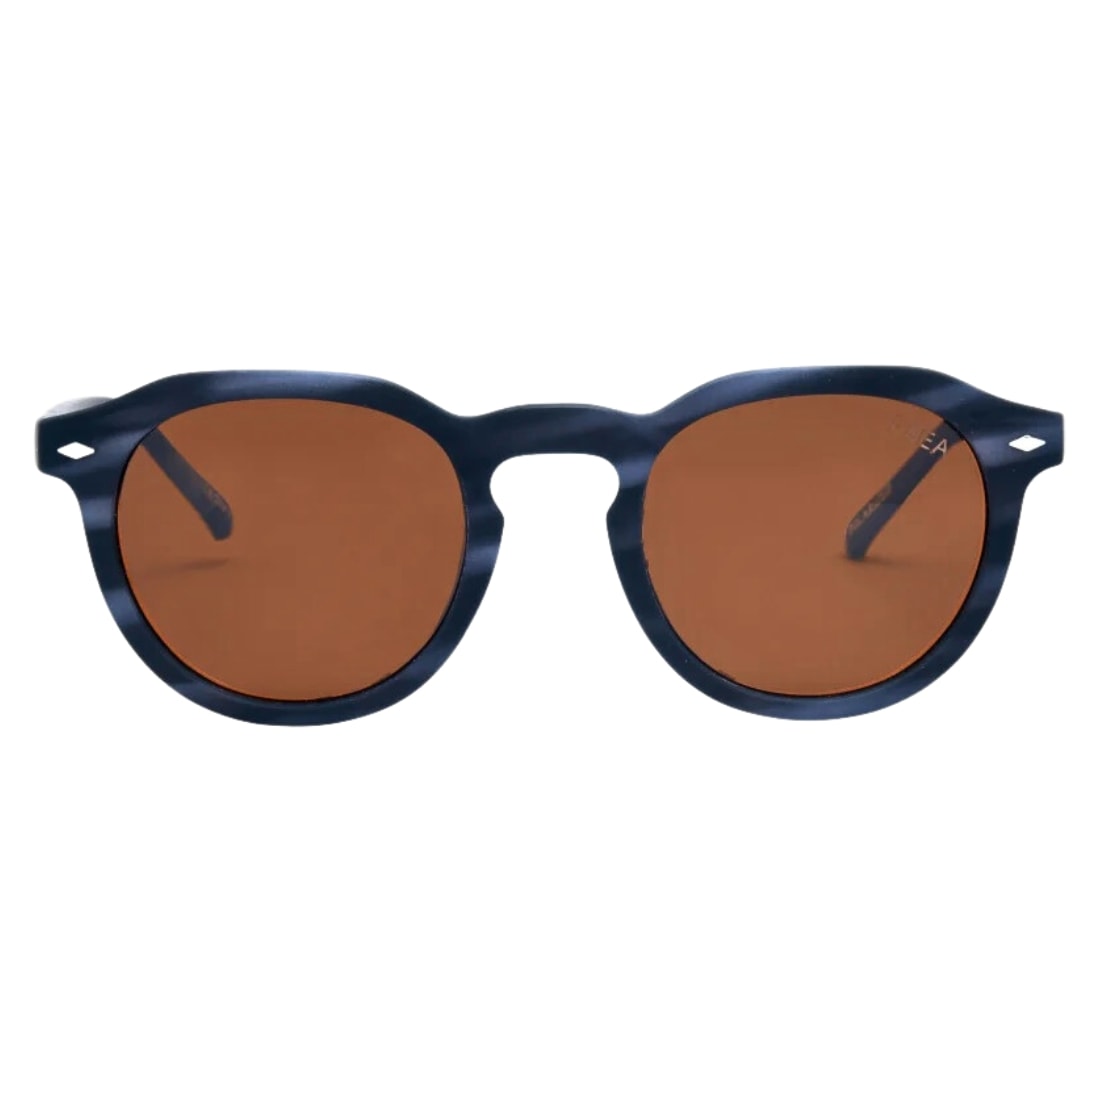 I-Sea Blair Conklin Polarised Sunglasses - Ocean/Brown - Round Sunglasses by I-Sea